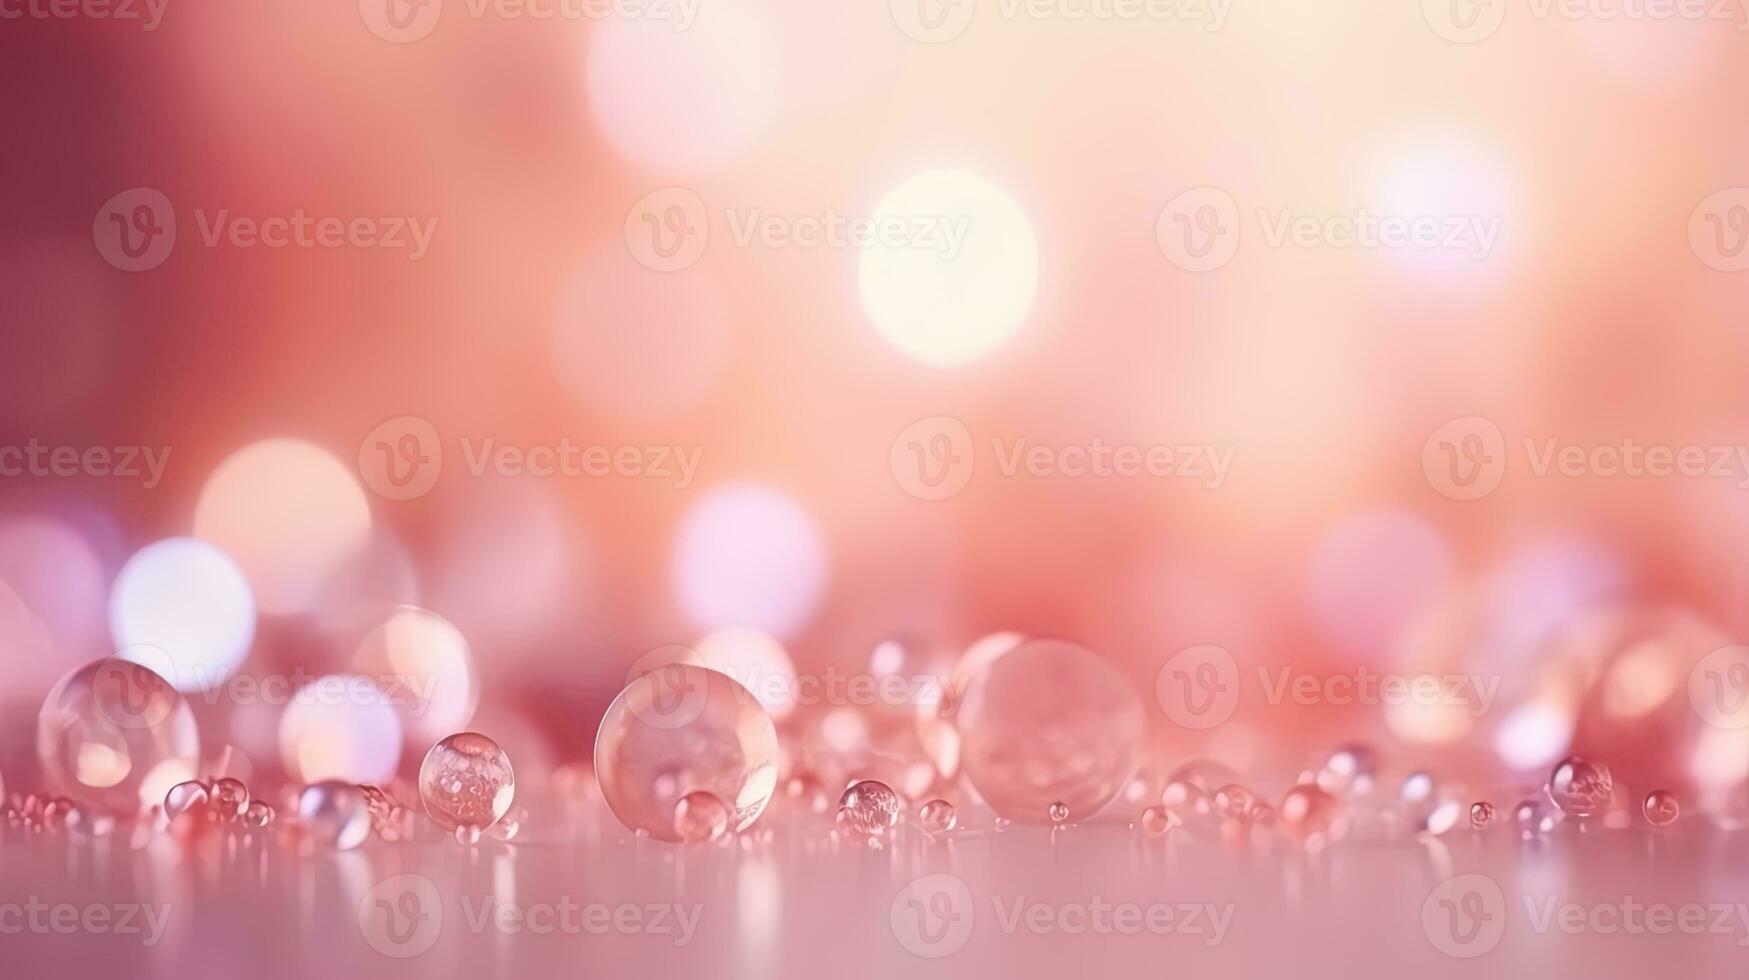 resumen de bokeh rosado pastel antecedentes brilla reluciente difuminar Mancha luces bokeh brillante Rosa oro ligero antecedentes textura foto